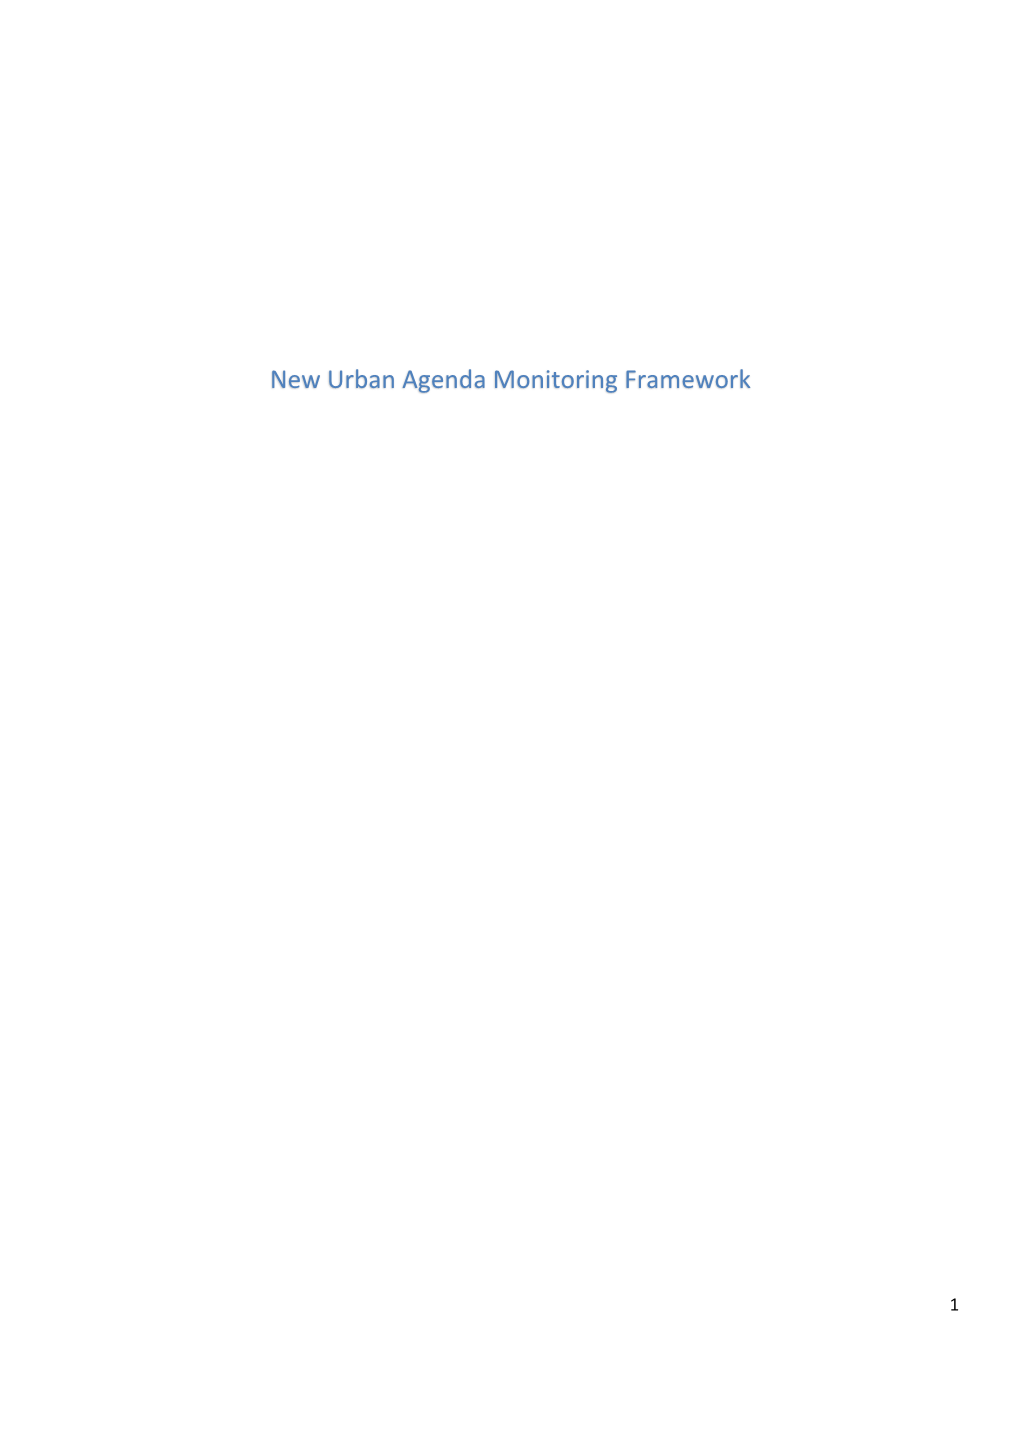 Draft New Urban Agenda Monitoring Framework